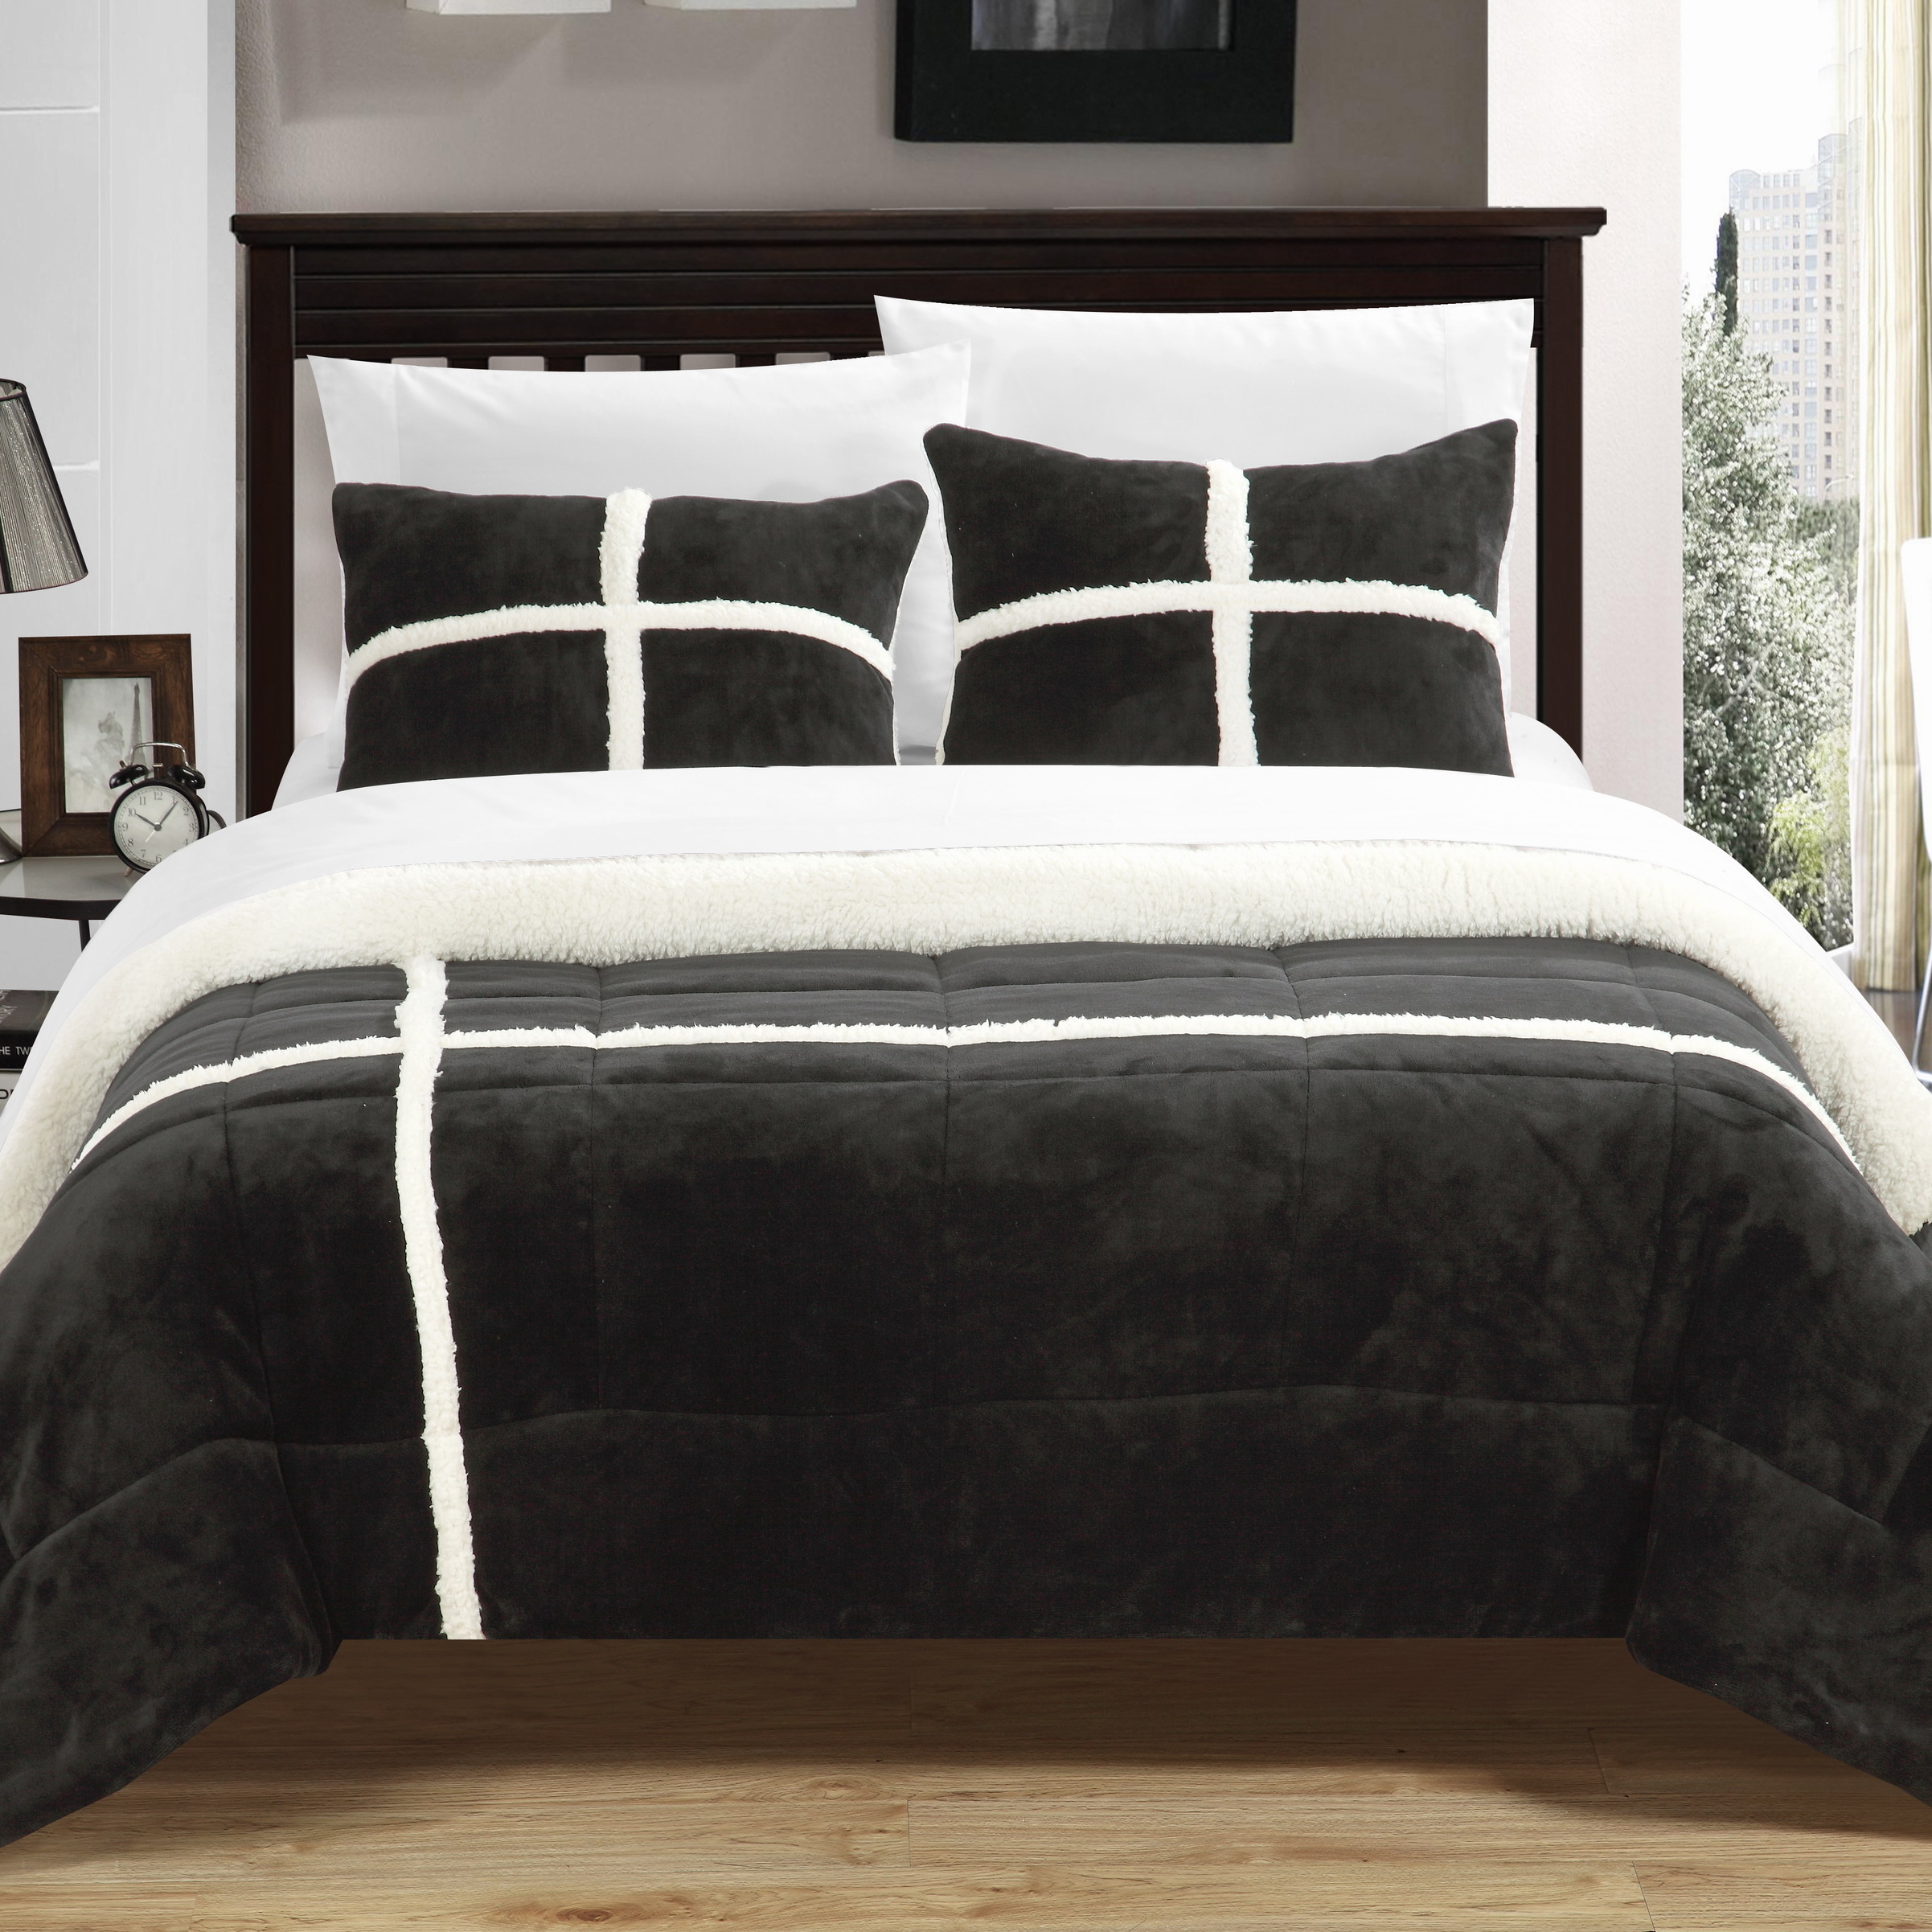 Chloe 3 Or 2 Piece Comforter Set Ultra Plush Micro Mink Sherpa Lined Bedding â Decorative Pillow Shams Included - Black, Queen - 3 Piece